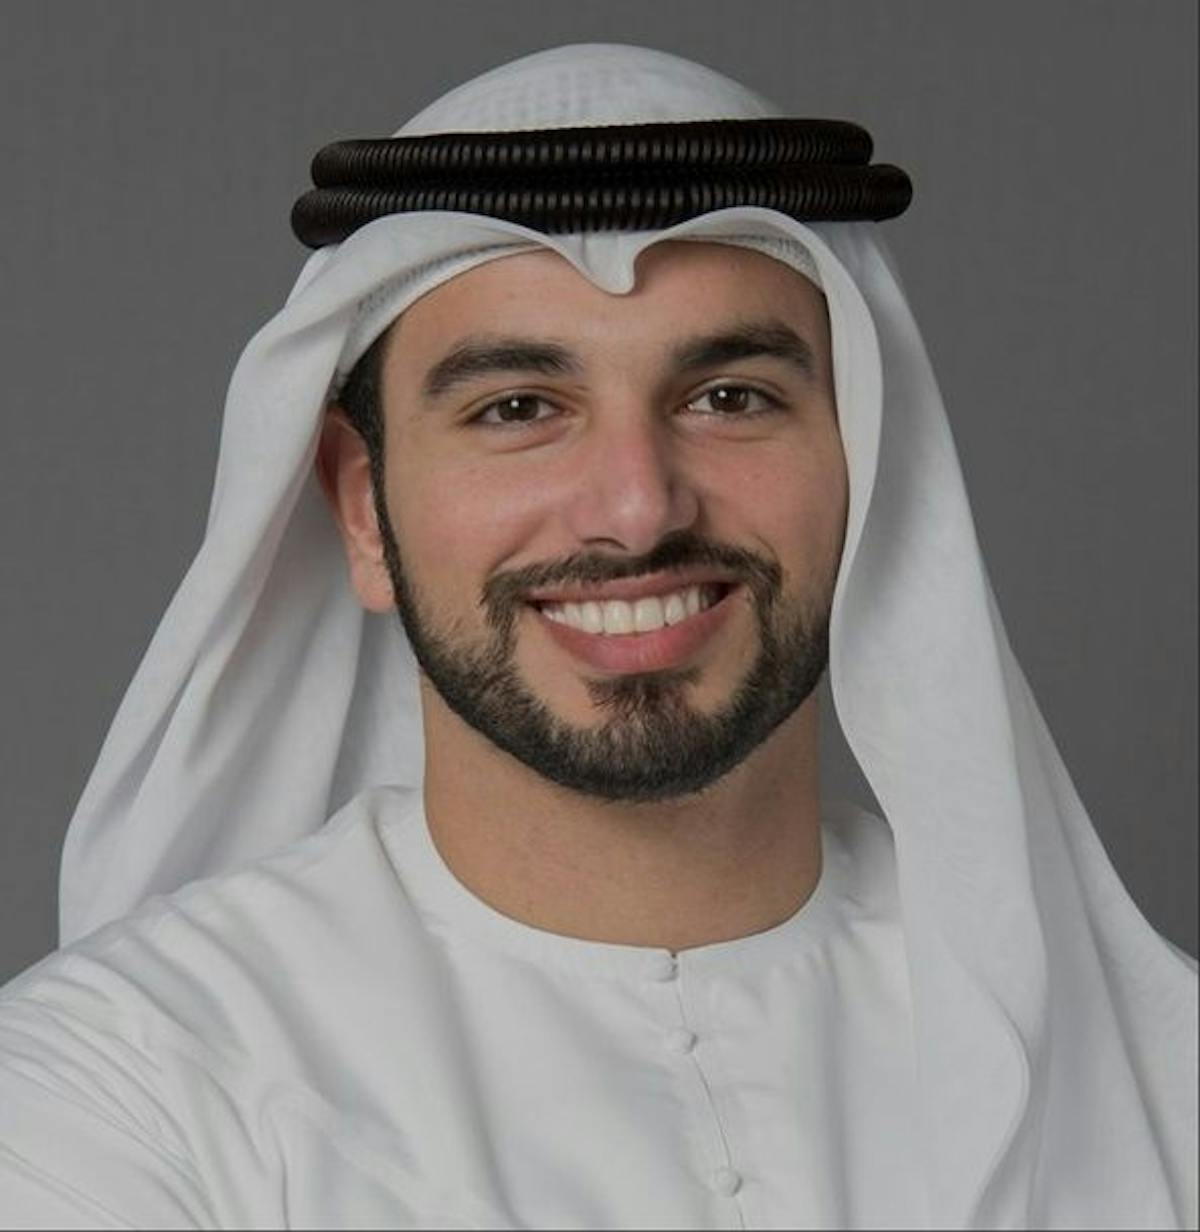 Saeed Al Gergawi, Vice President of Dubai Chamber of Digital Economy